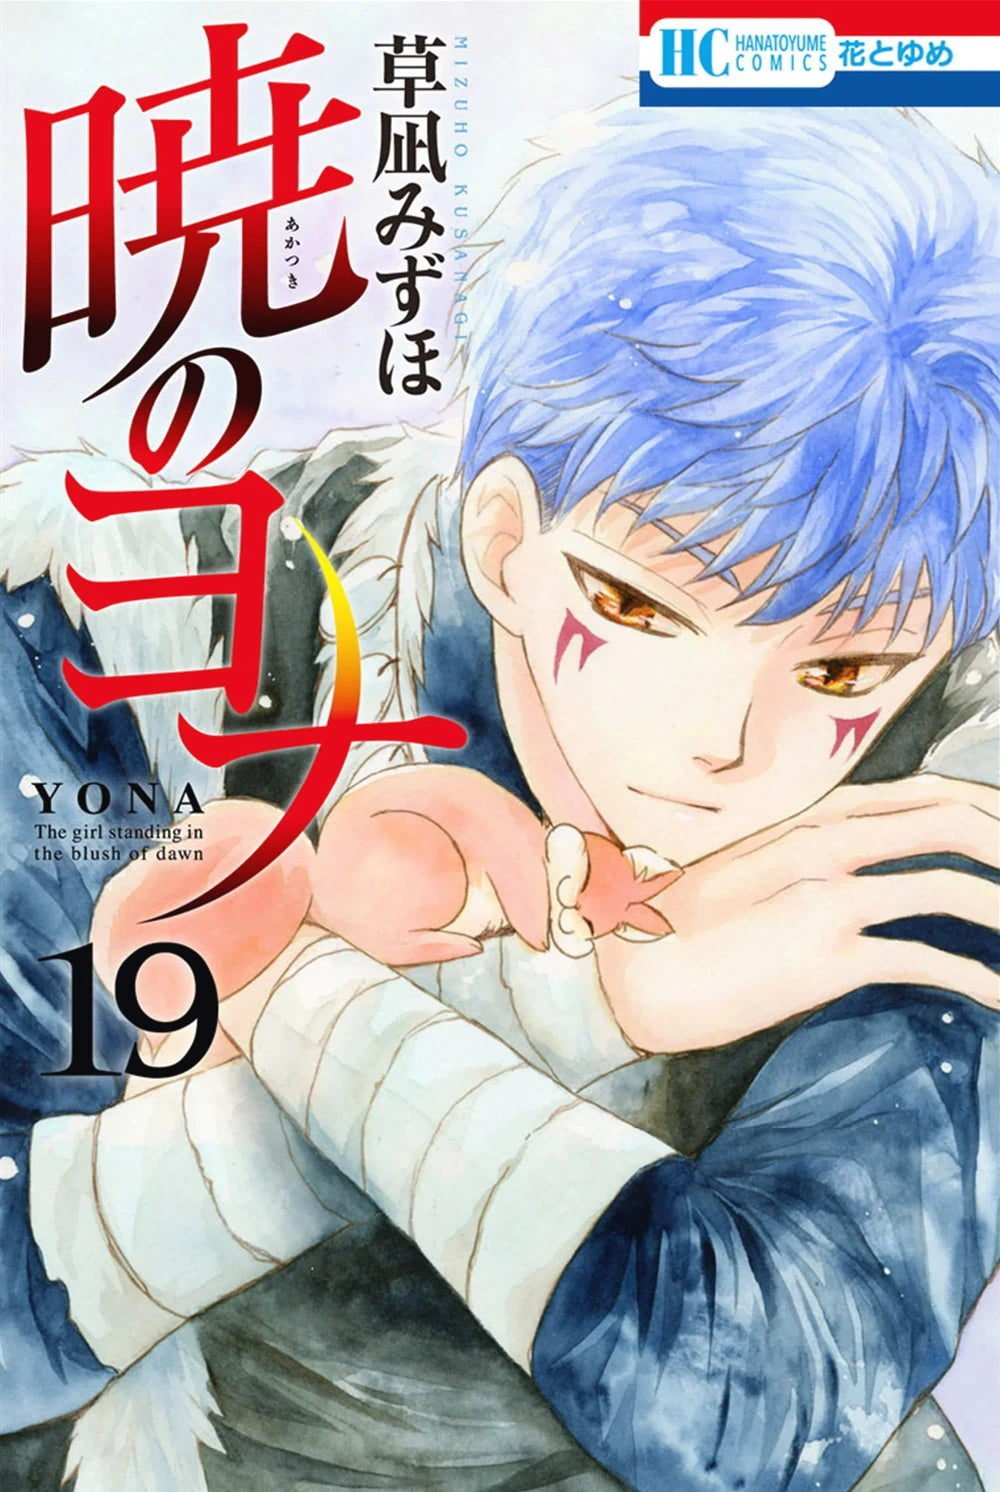 Manga Akatsuki No Yona 19 Version Japonaise